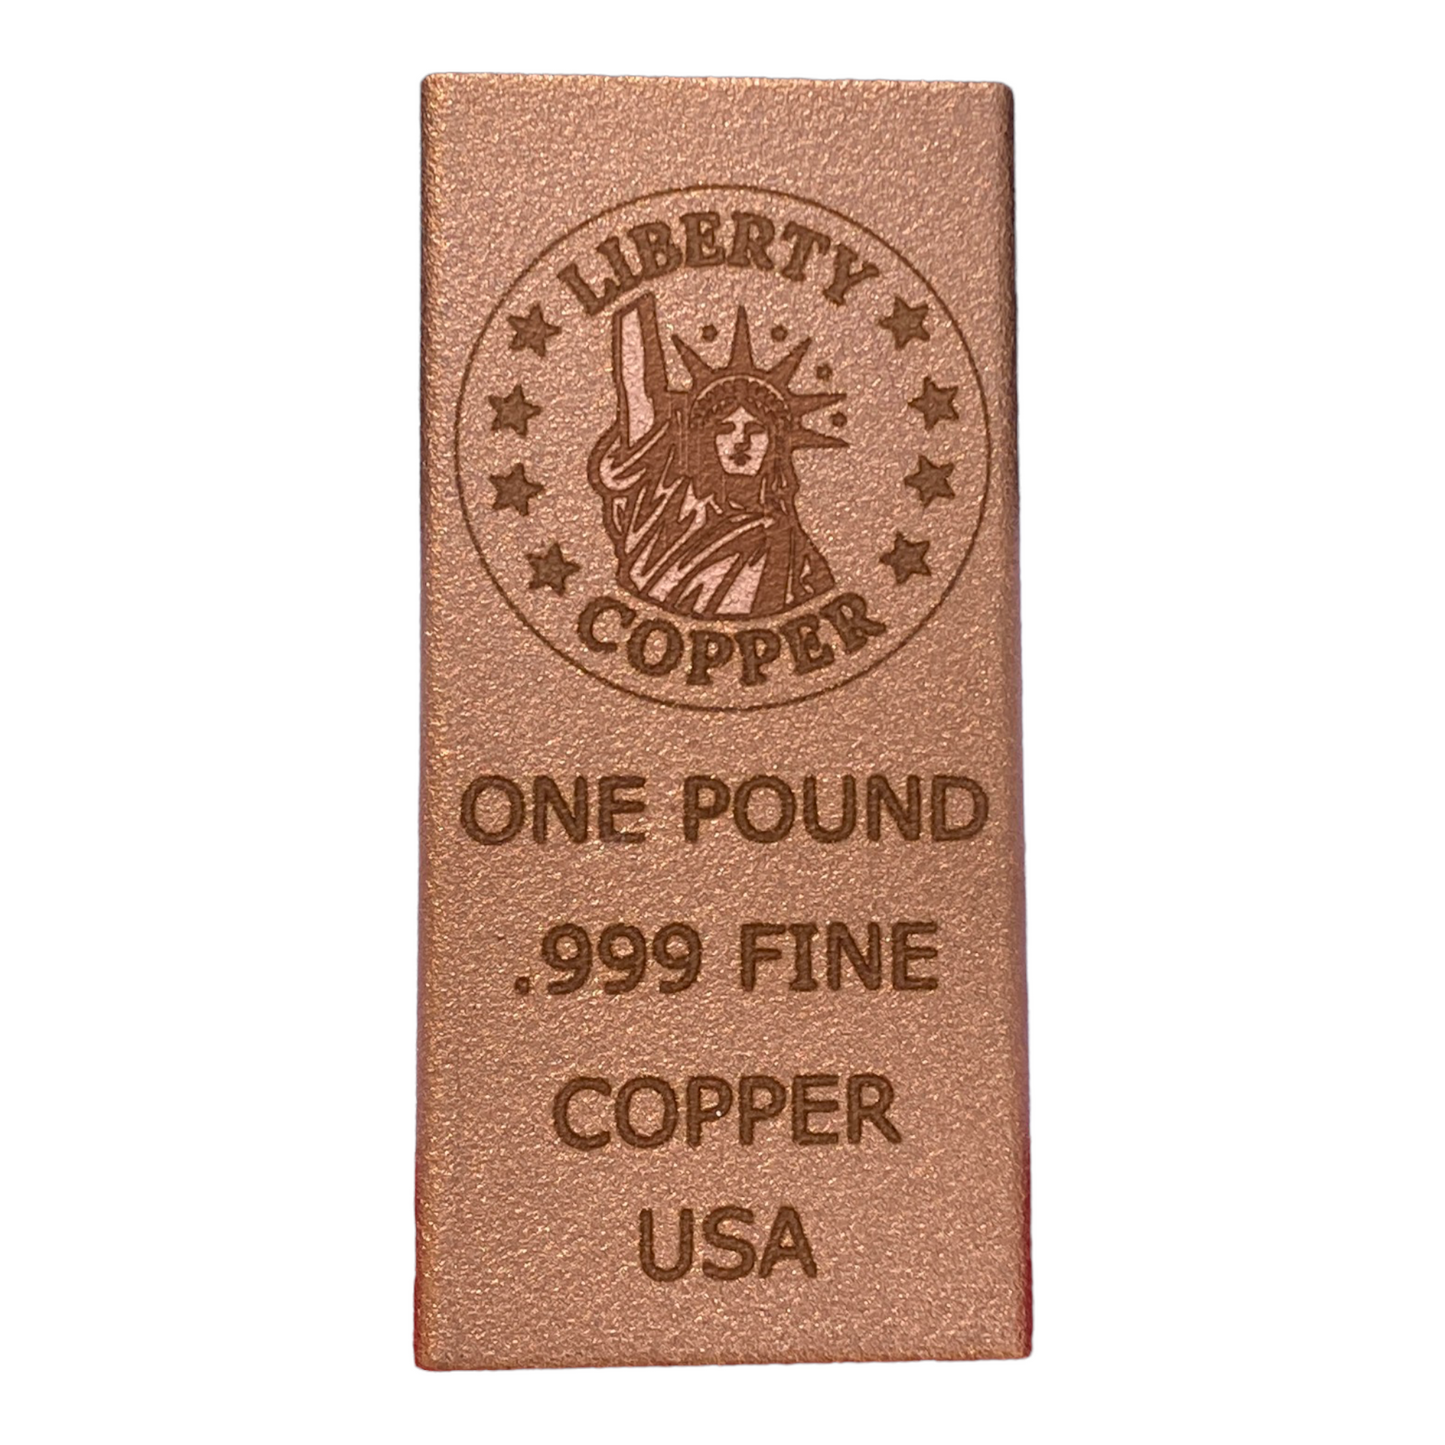 Liberty Copper Design one pound Copper bar by Liberty Copper